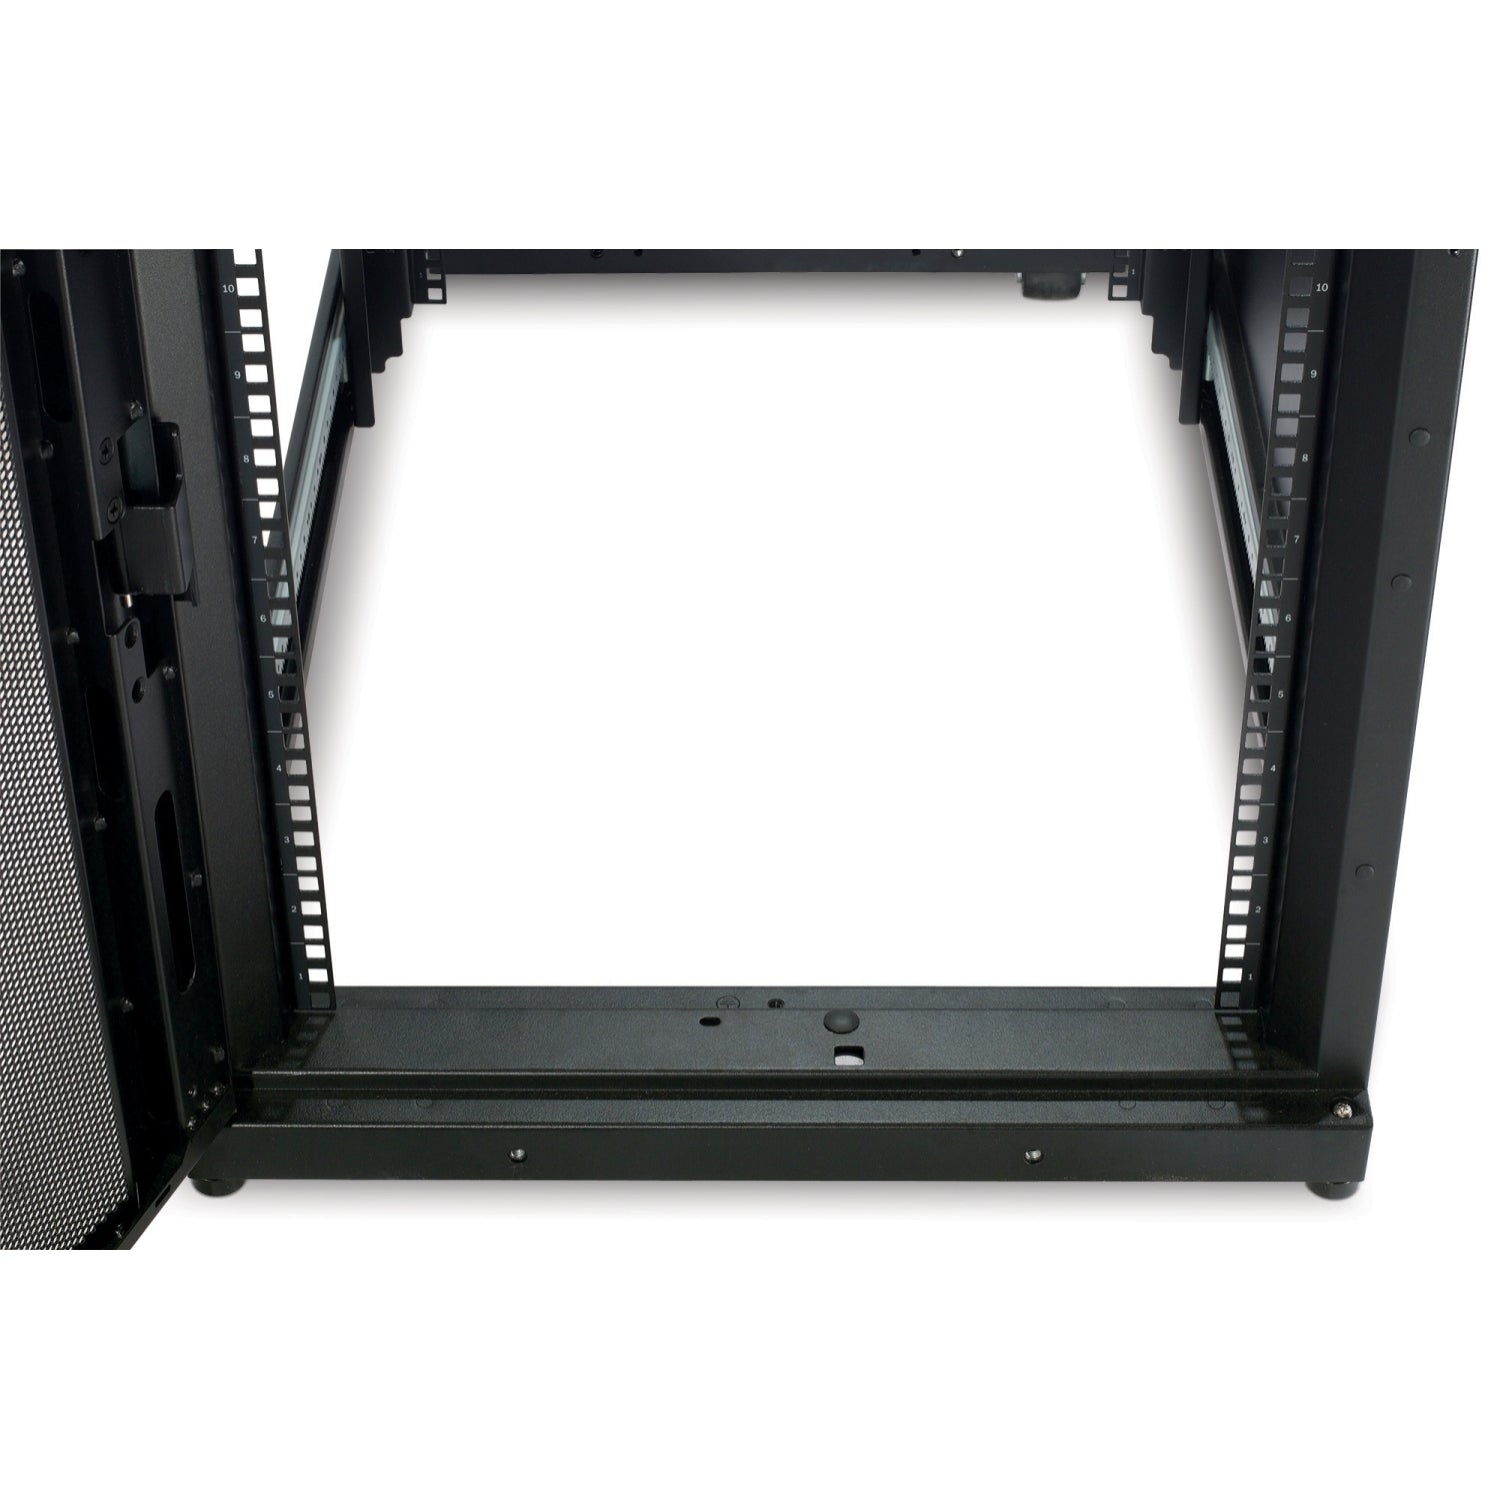 Envolvente para rack de servidor NetShelter SX 42U de APC, 600 mm x 1070 mm, con laterales negros.